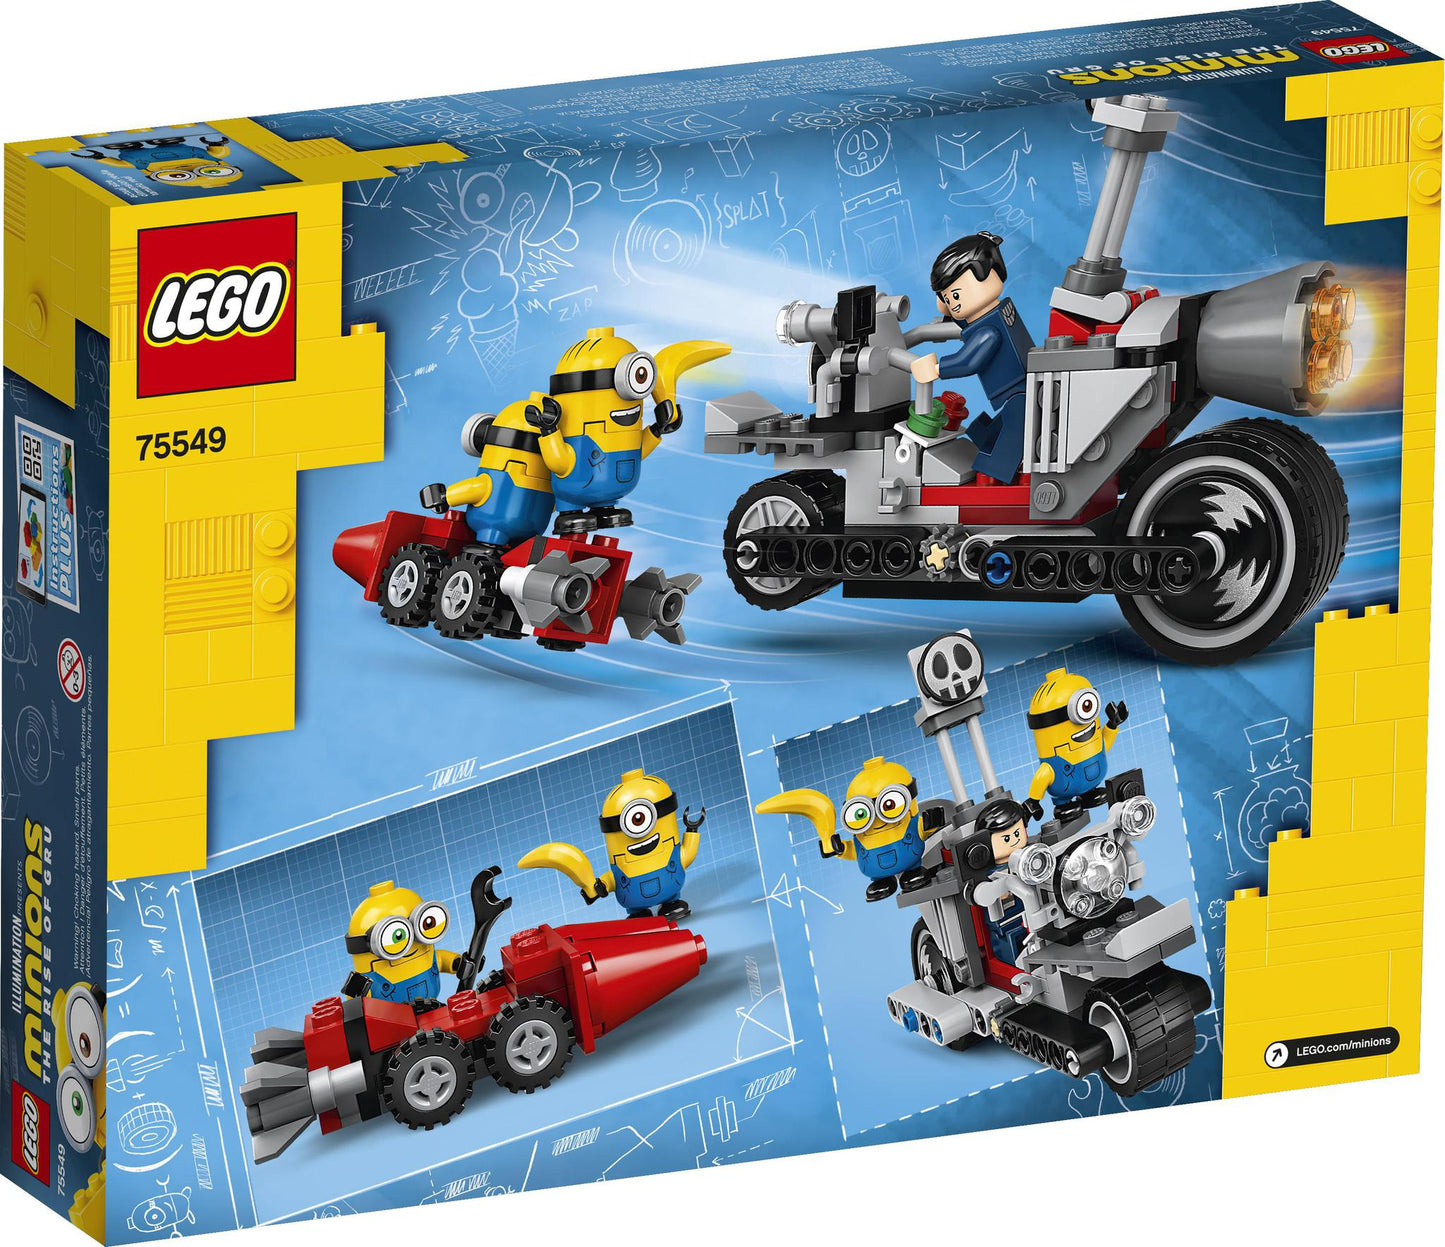 LEGO Minions Unstoppable Bike Chase 75549 Minions Toy Set, with Bob, Stuart and Gru Minion Figures (136 Pieces)